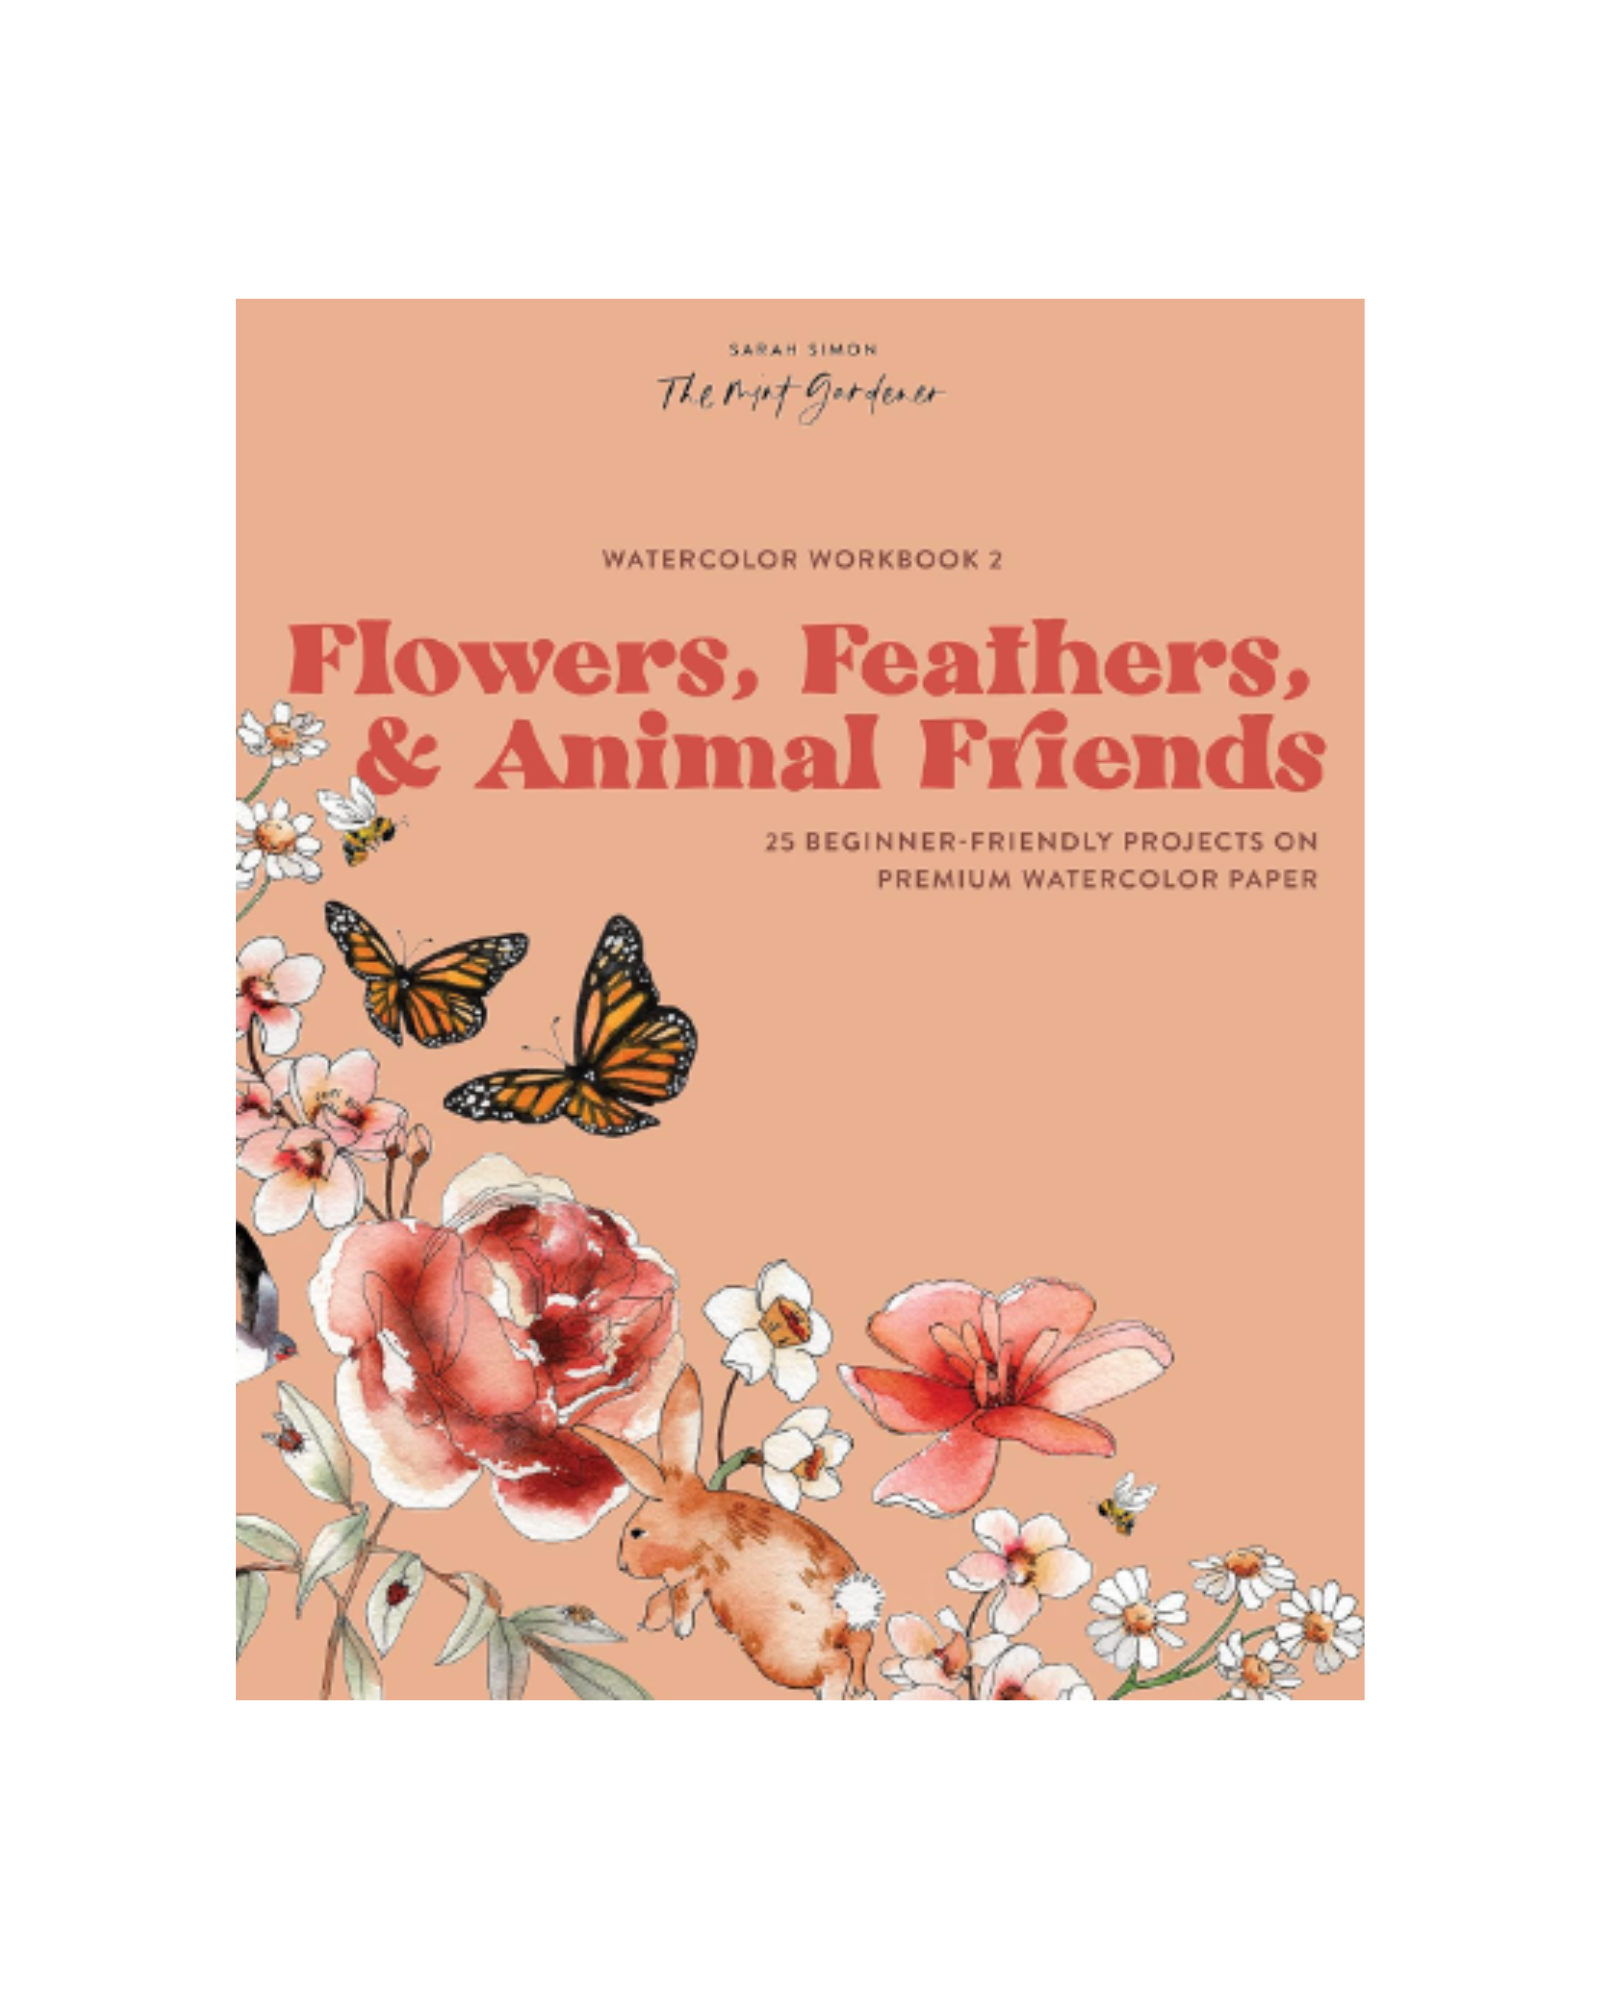 Watercolor Workbook: Flowers, Feathers, & Animal Friends